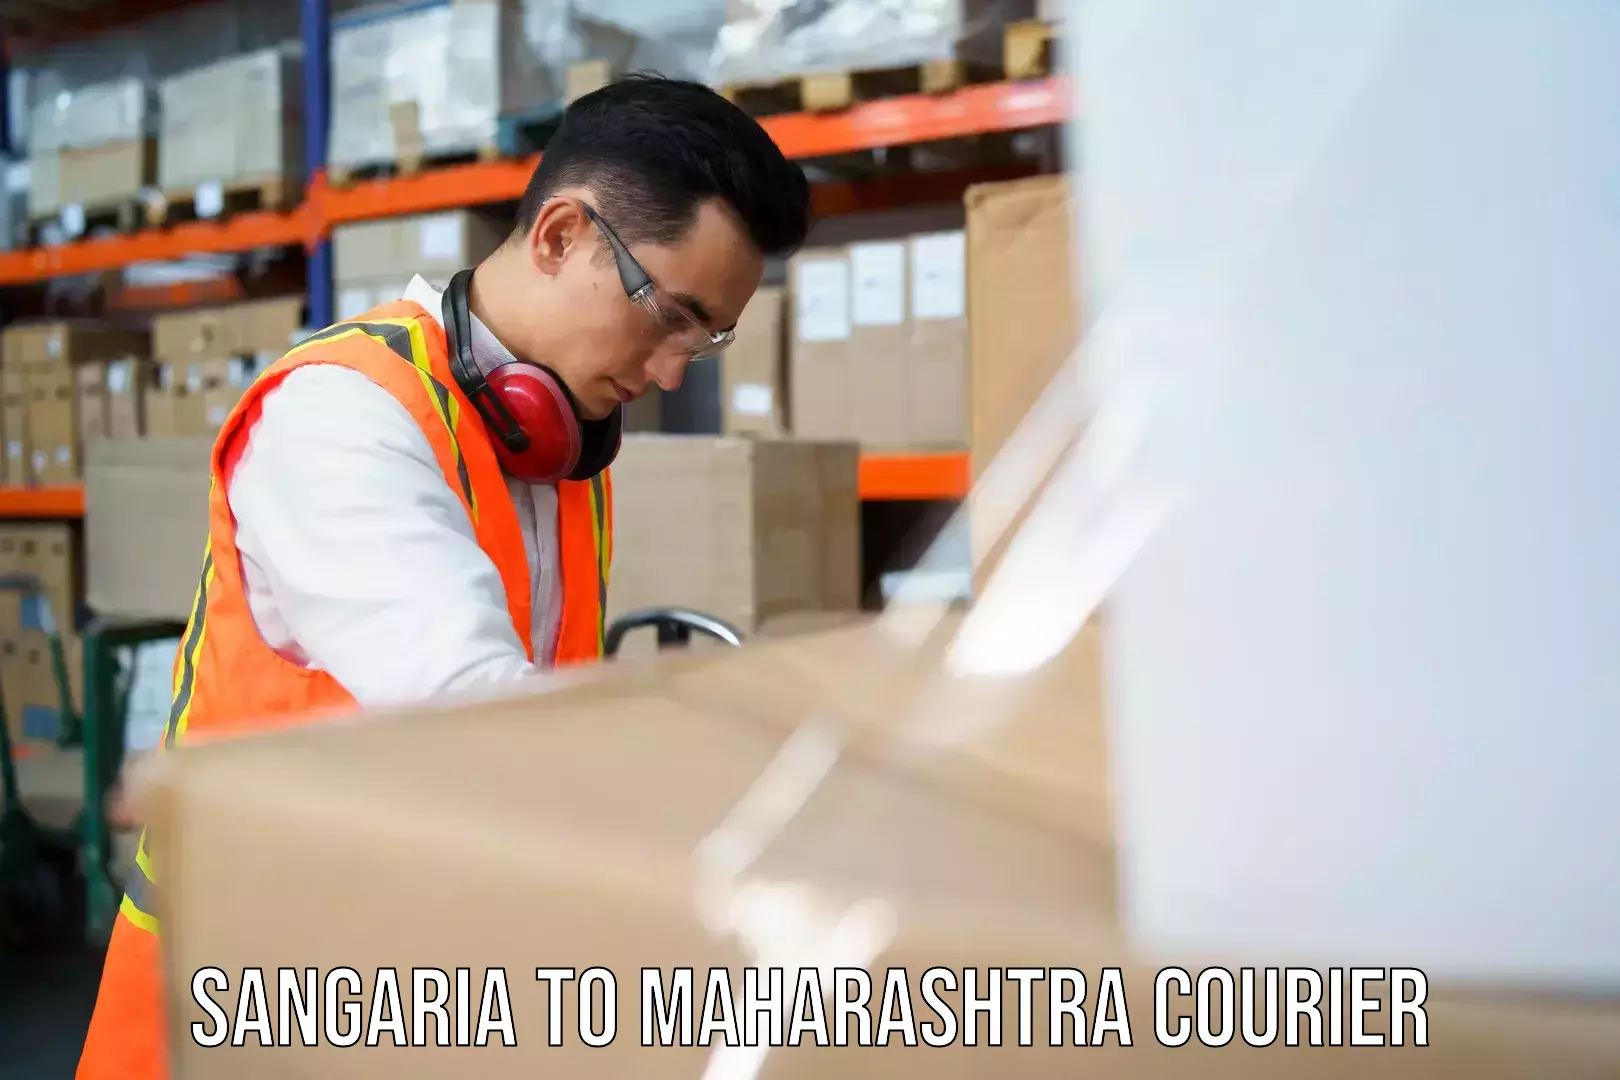 International courier networks Sangaria to Asangi Jat